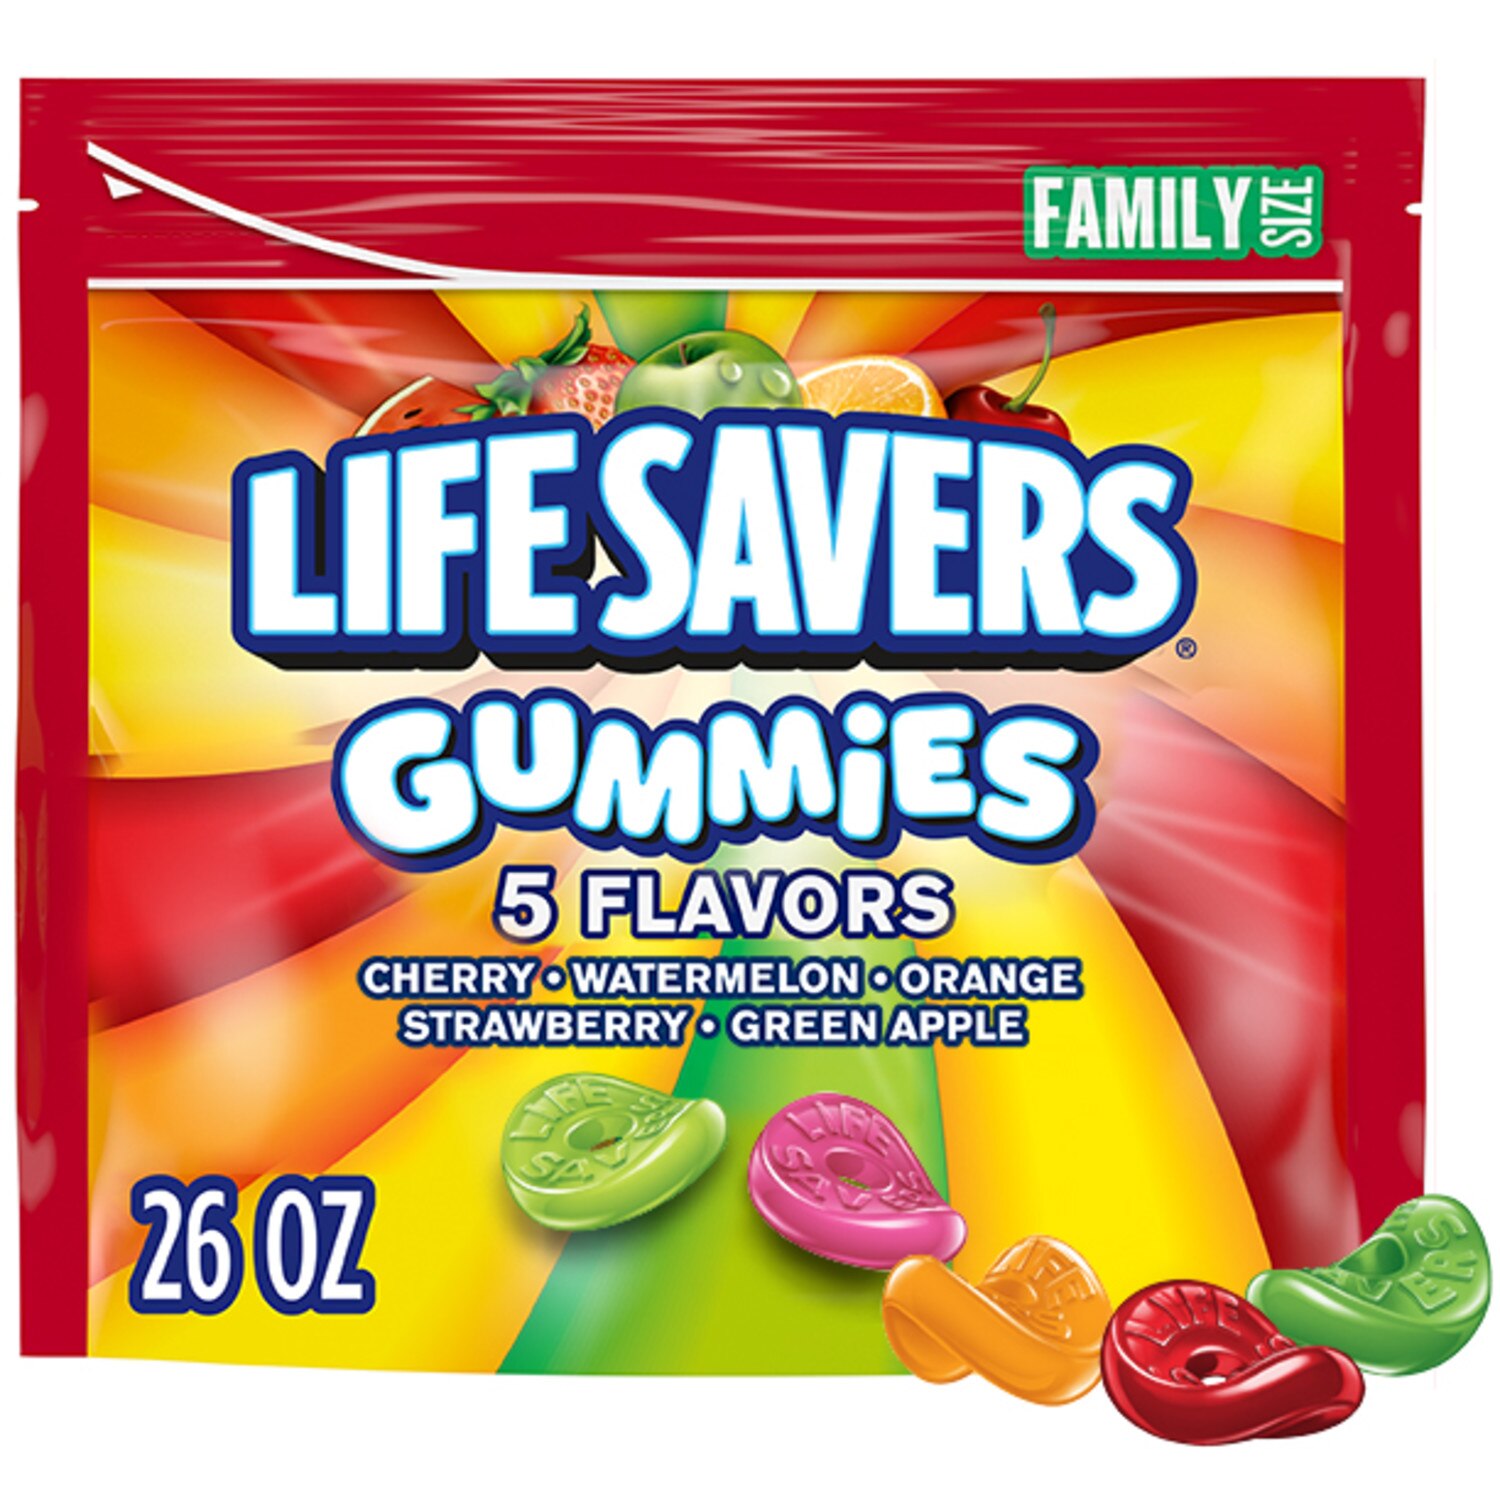 Life Savers - Gomitas de 5 sabores, bolsa tamaño familiar, 26 oz